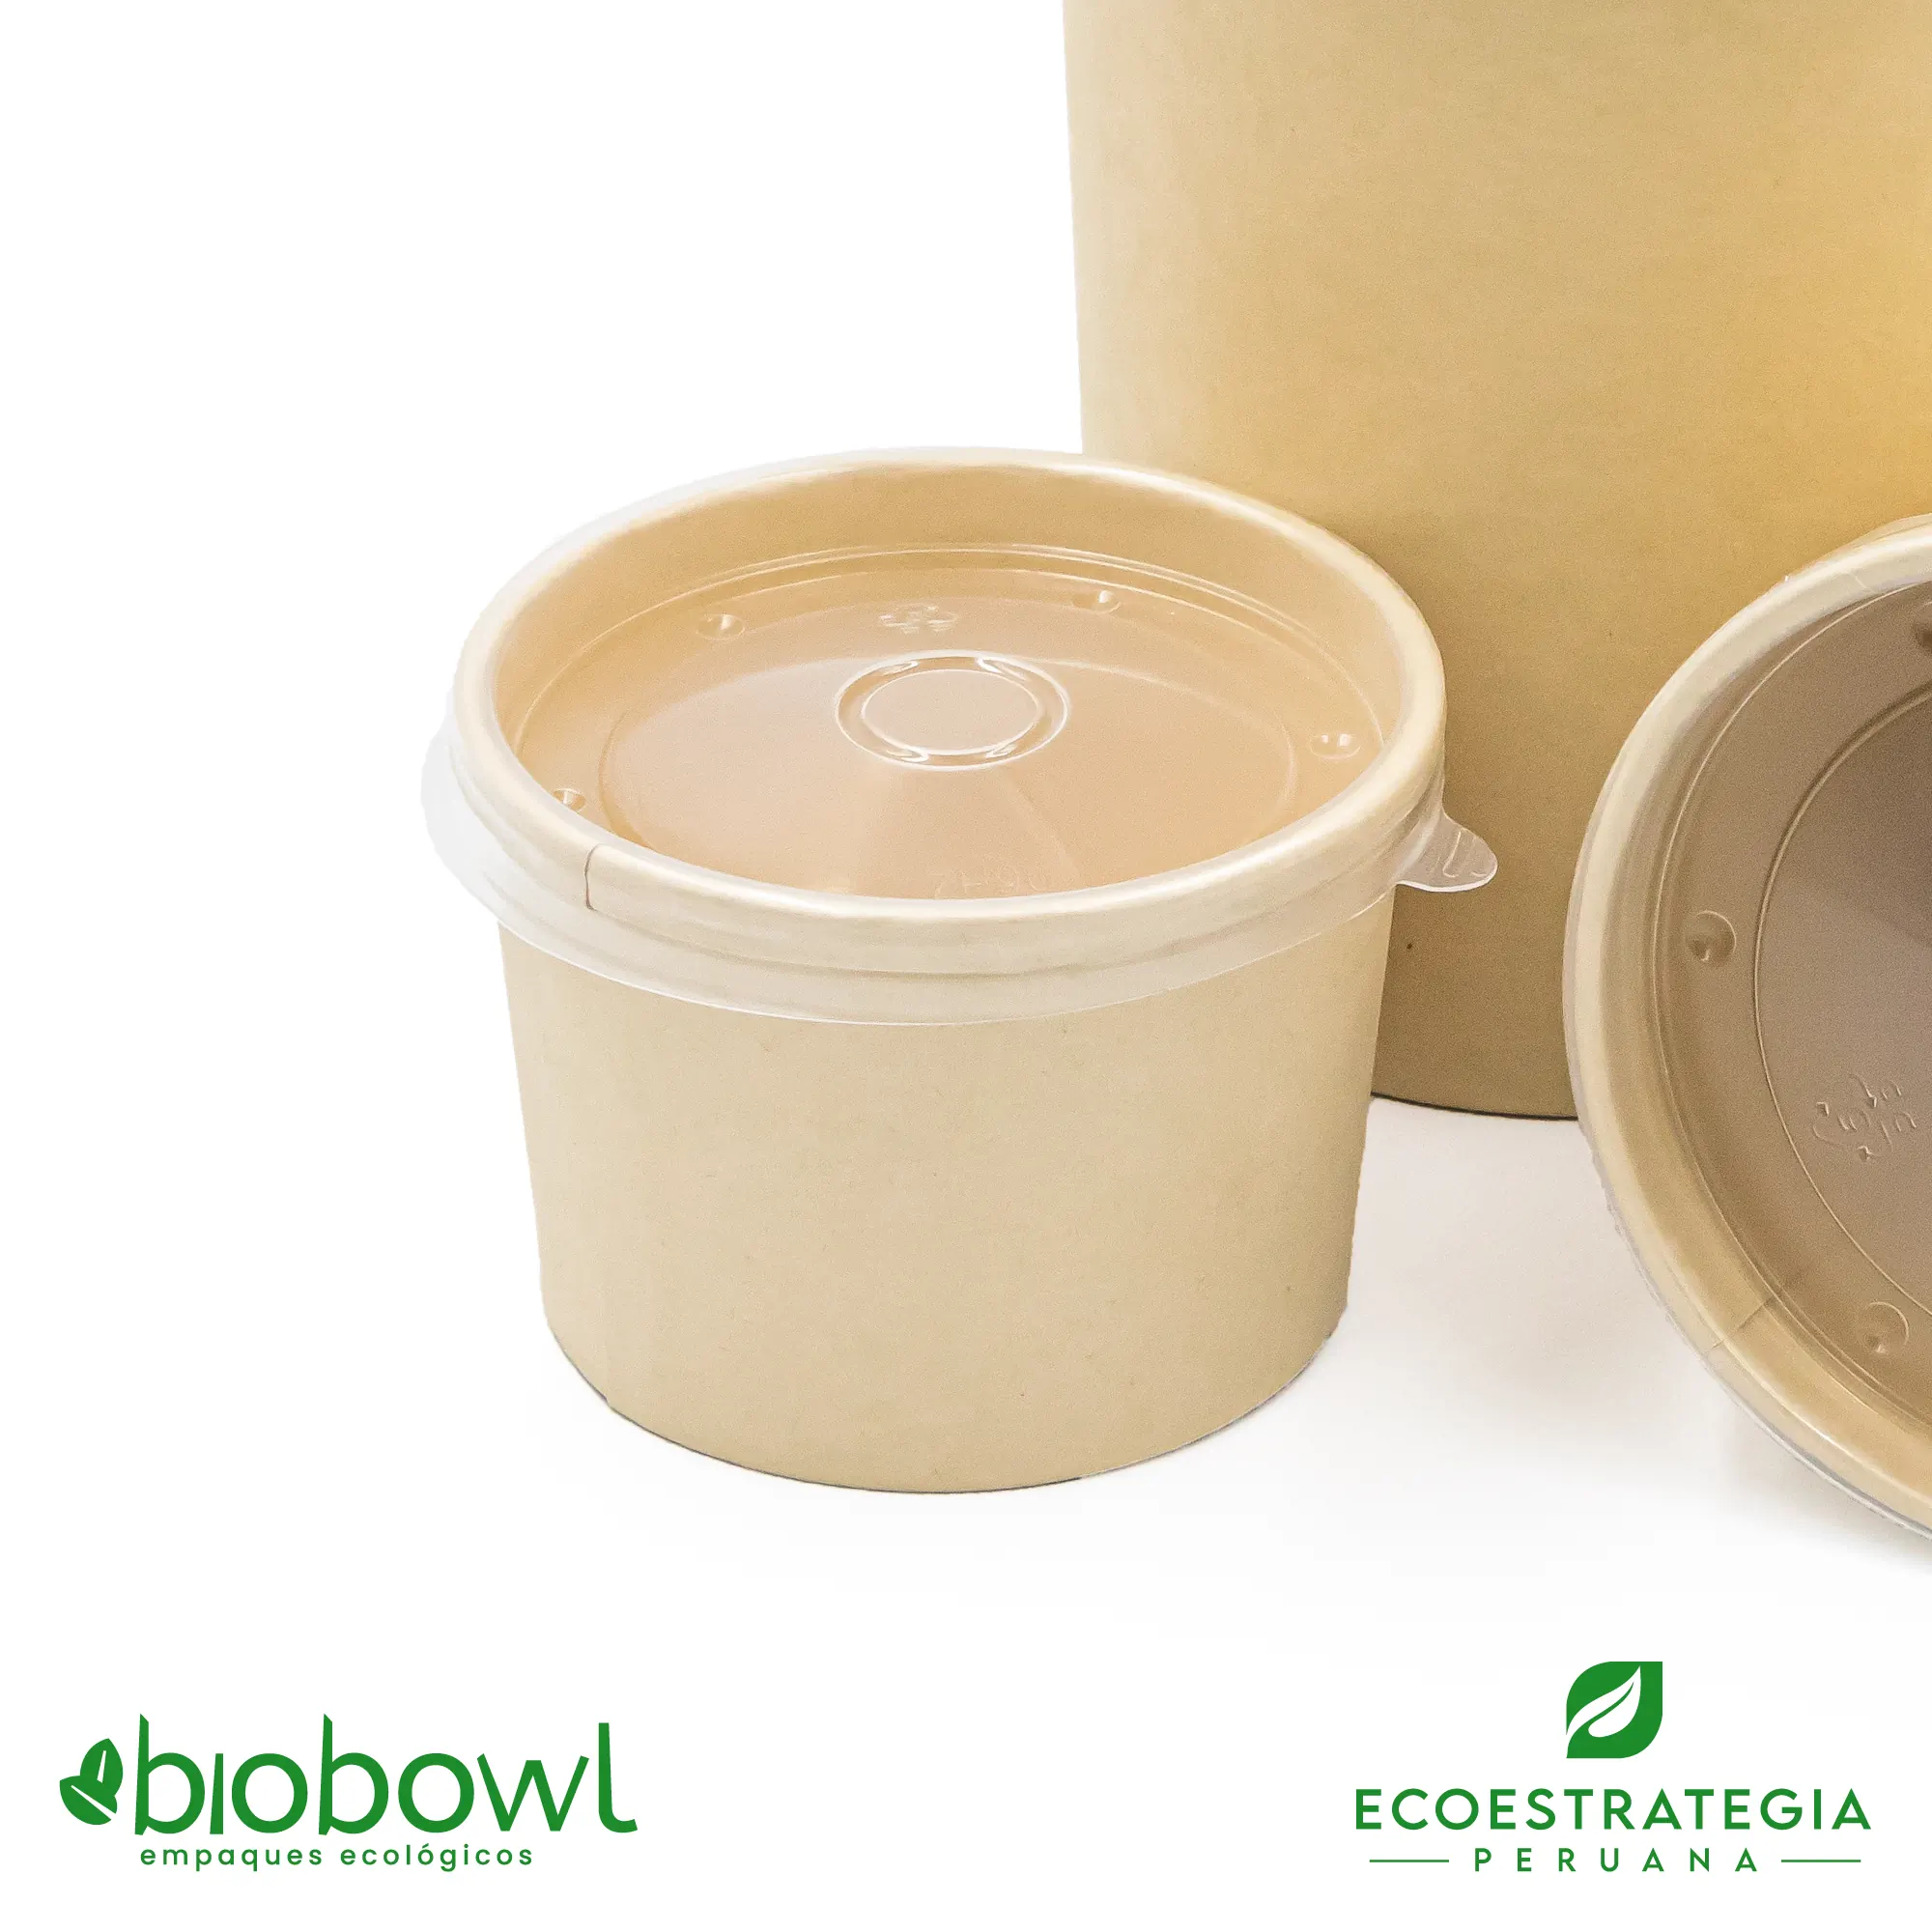 El bowl bambú biodegradable de 8oz, EP-S8 es conocido como bowl bamboo 8oz, bambú sopero 8oz, bambú salad 8oz, bowl para ensalada con tapa pet 8oz o sopero con fibra de bambú 8oz, bowl bambú ecologico, bowl bambú reciclable, bowl descartable